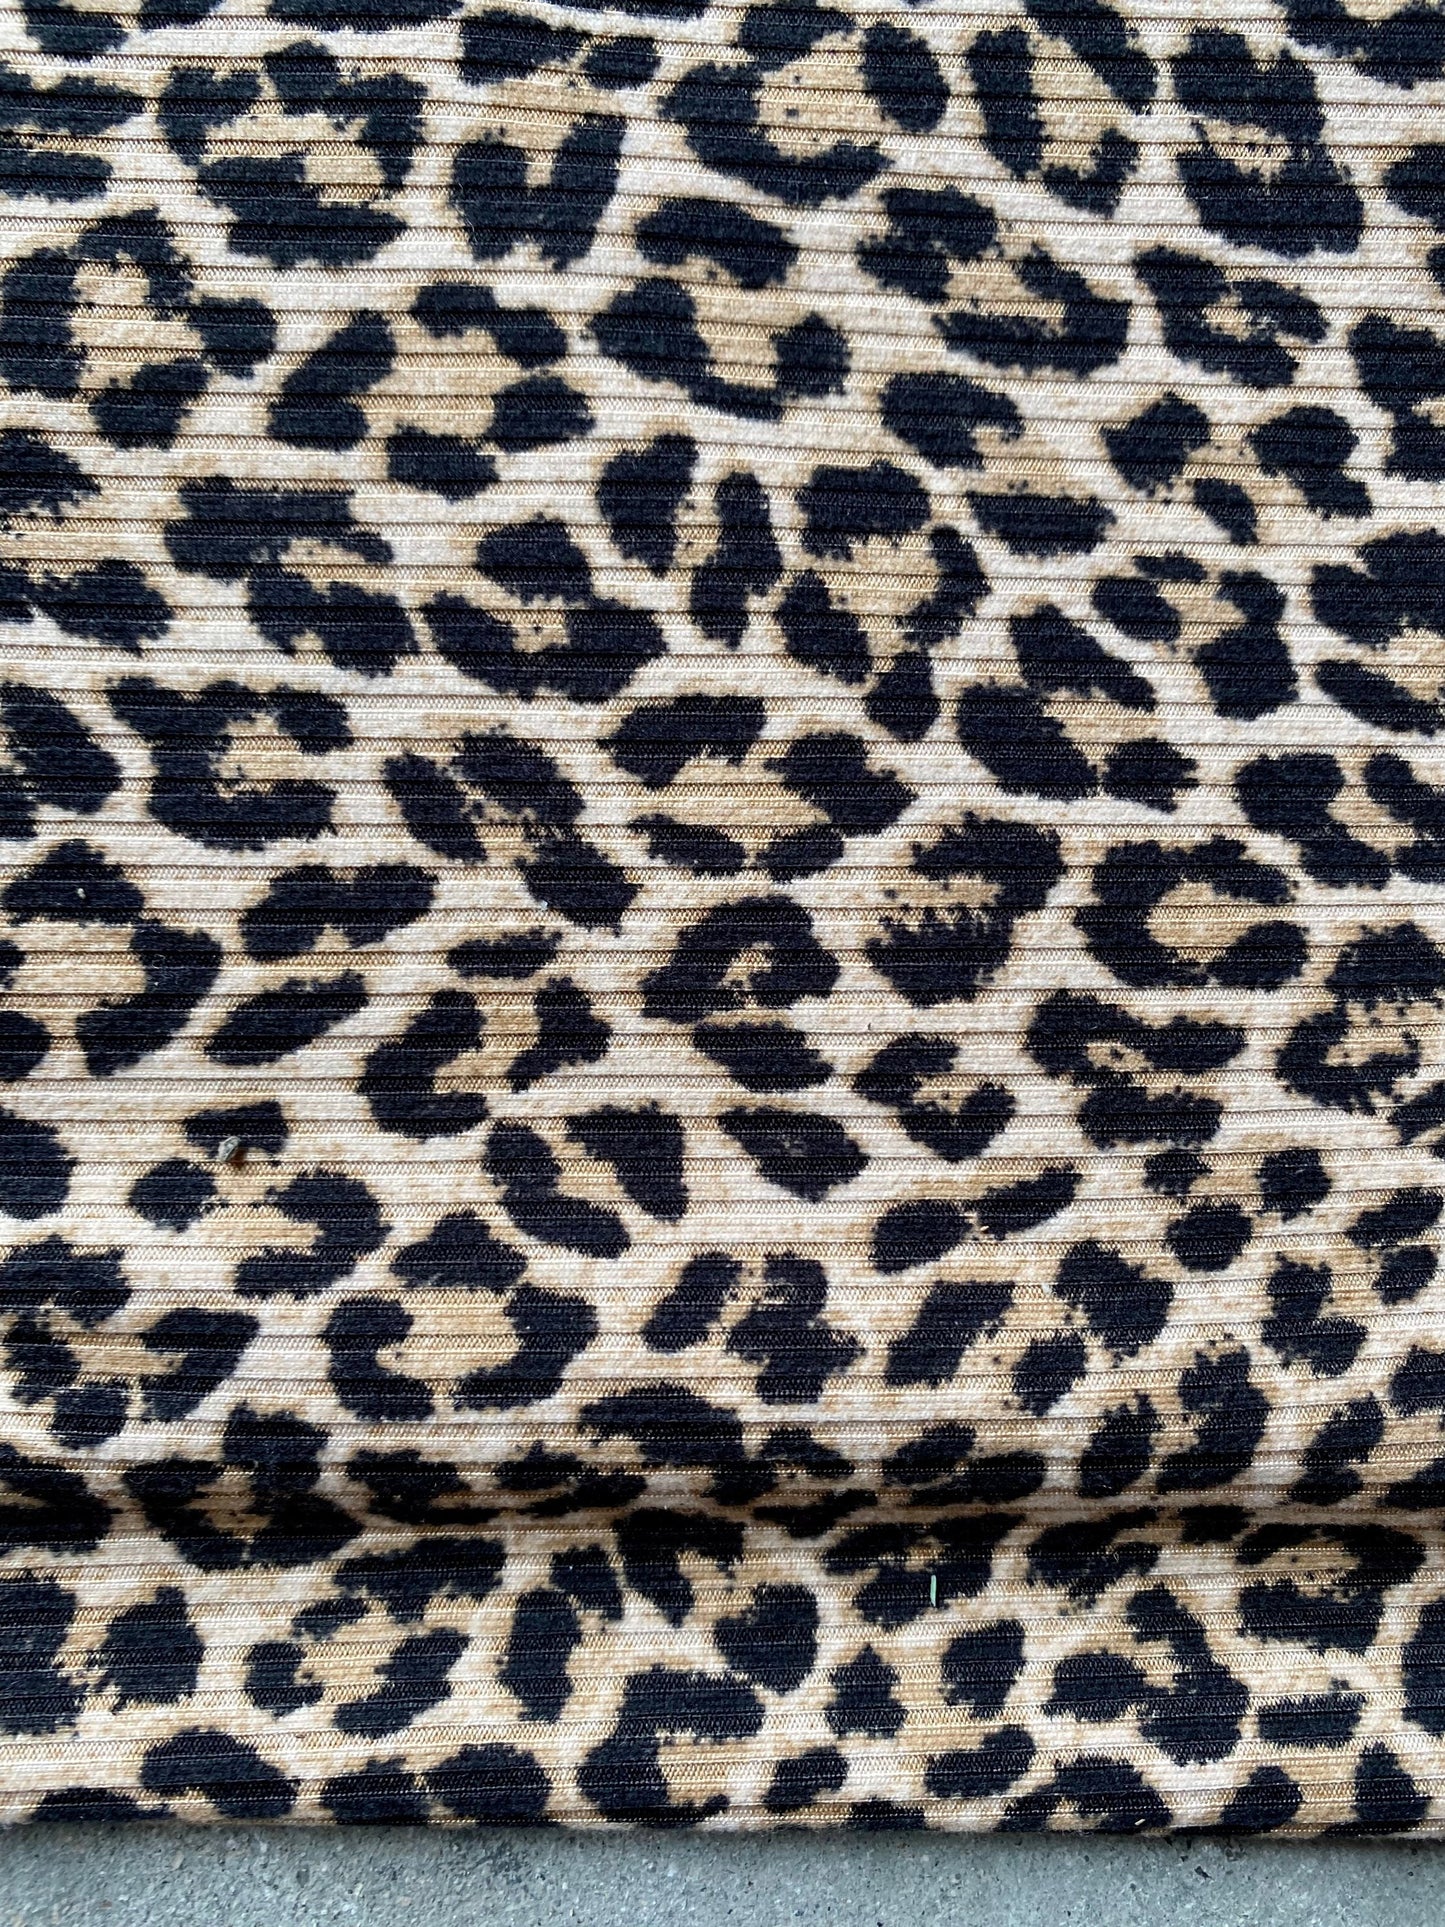 4x2 Rib Knit Spandex Leopard Print Fabric by the Yard 200GSM